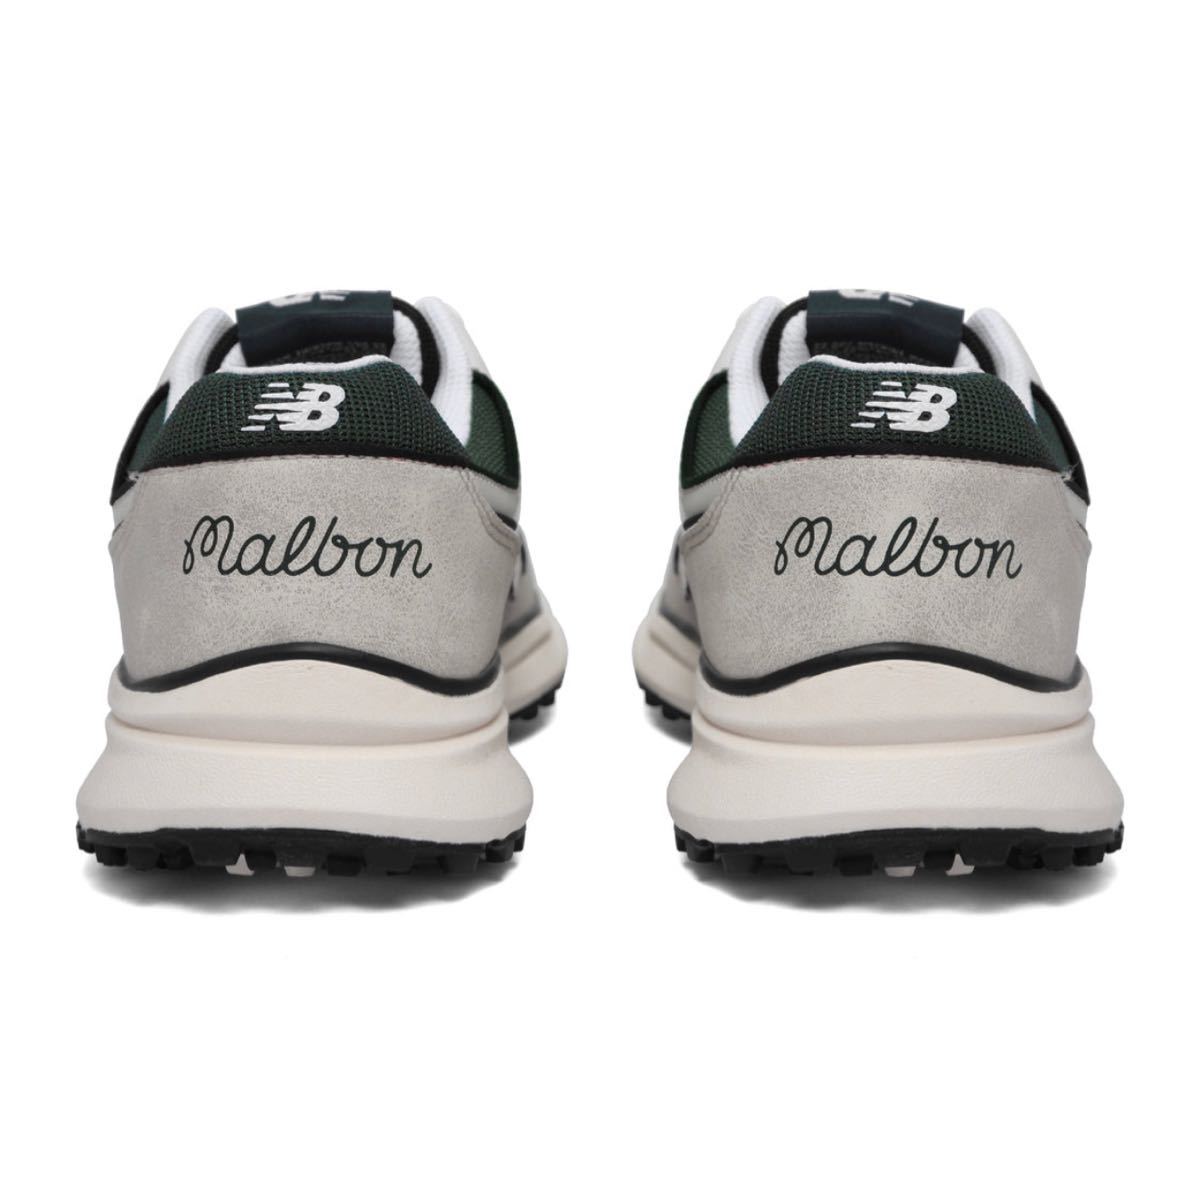 Malbon x New Balance 997G グレー/グリーン 数量限定 27.5cm